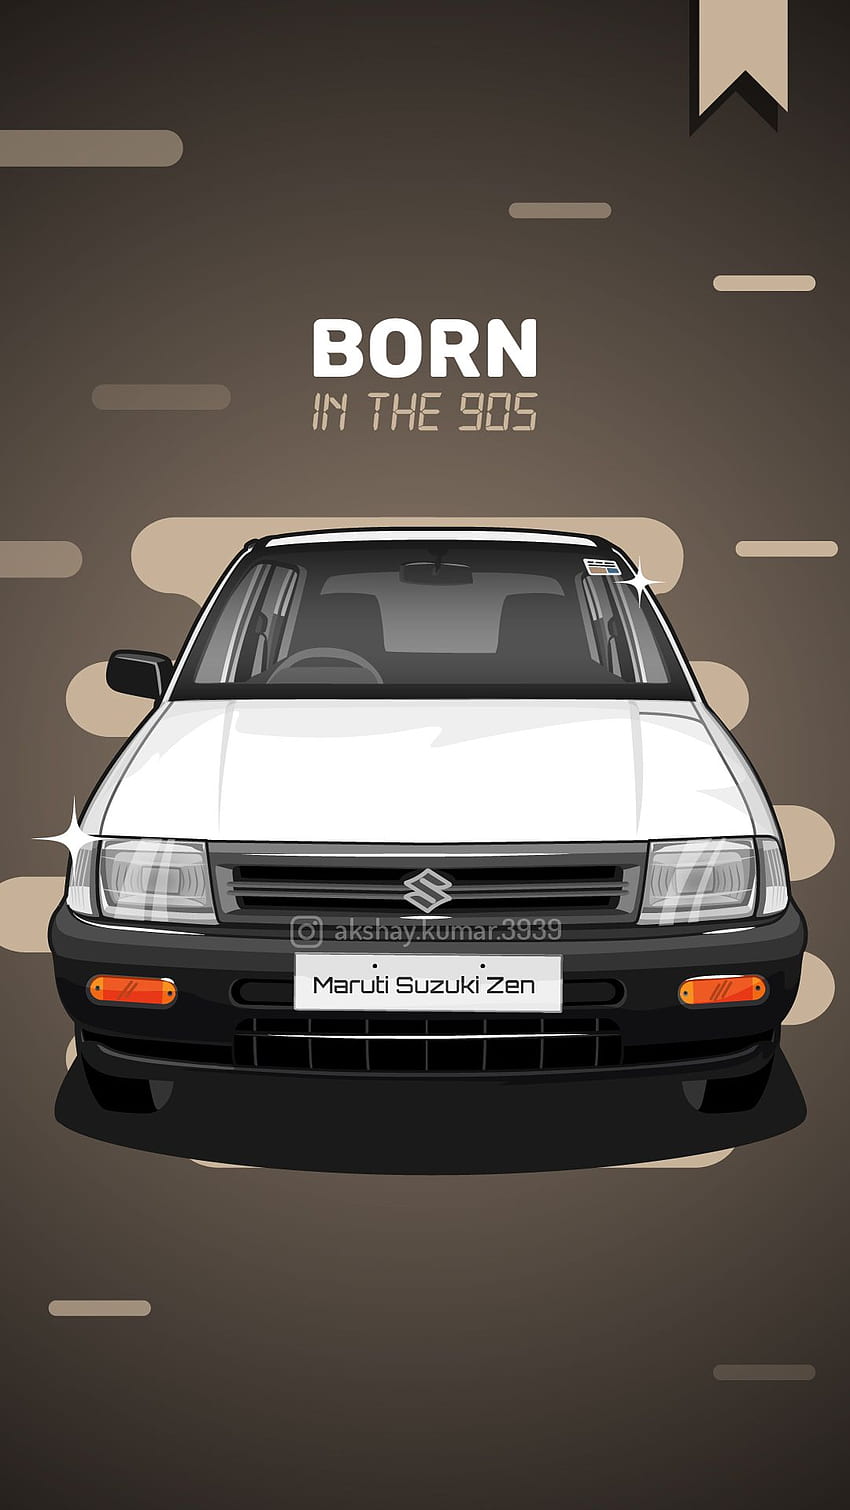 Maruti Suzuki Zen. coches indios. arte vectorial fondo de pantalla del teléfono